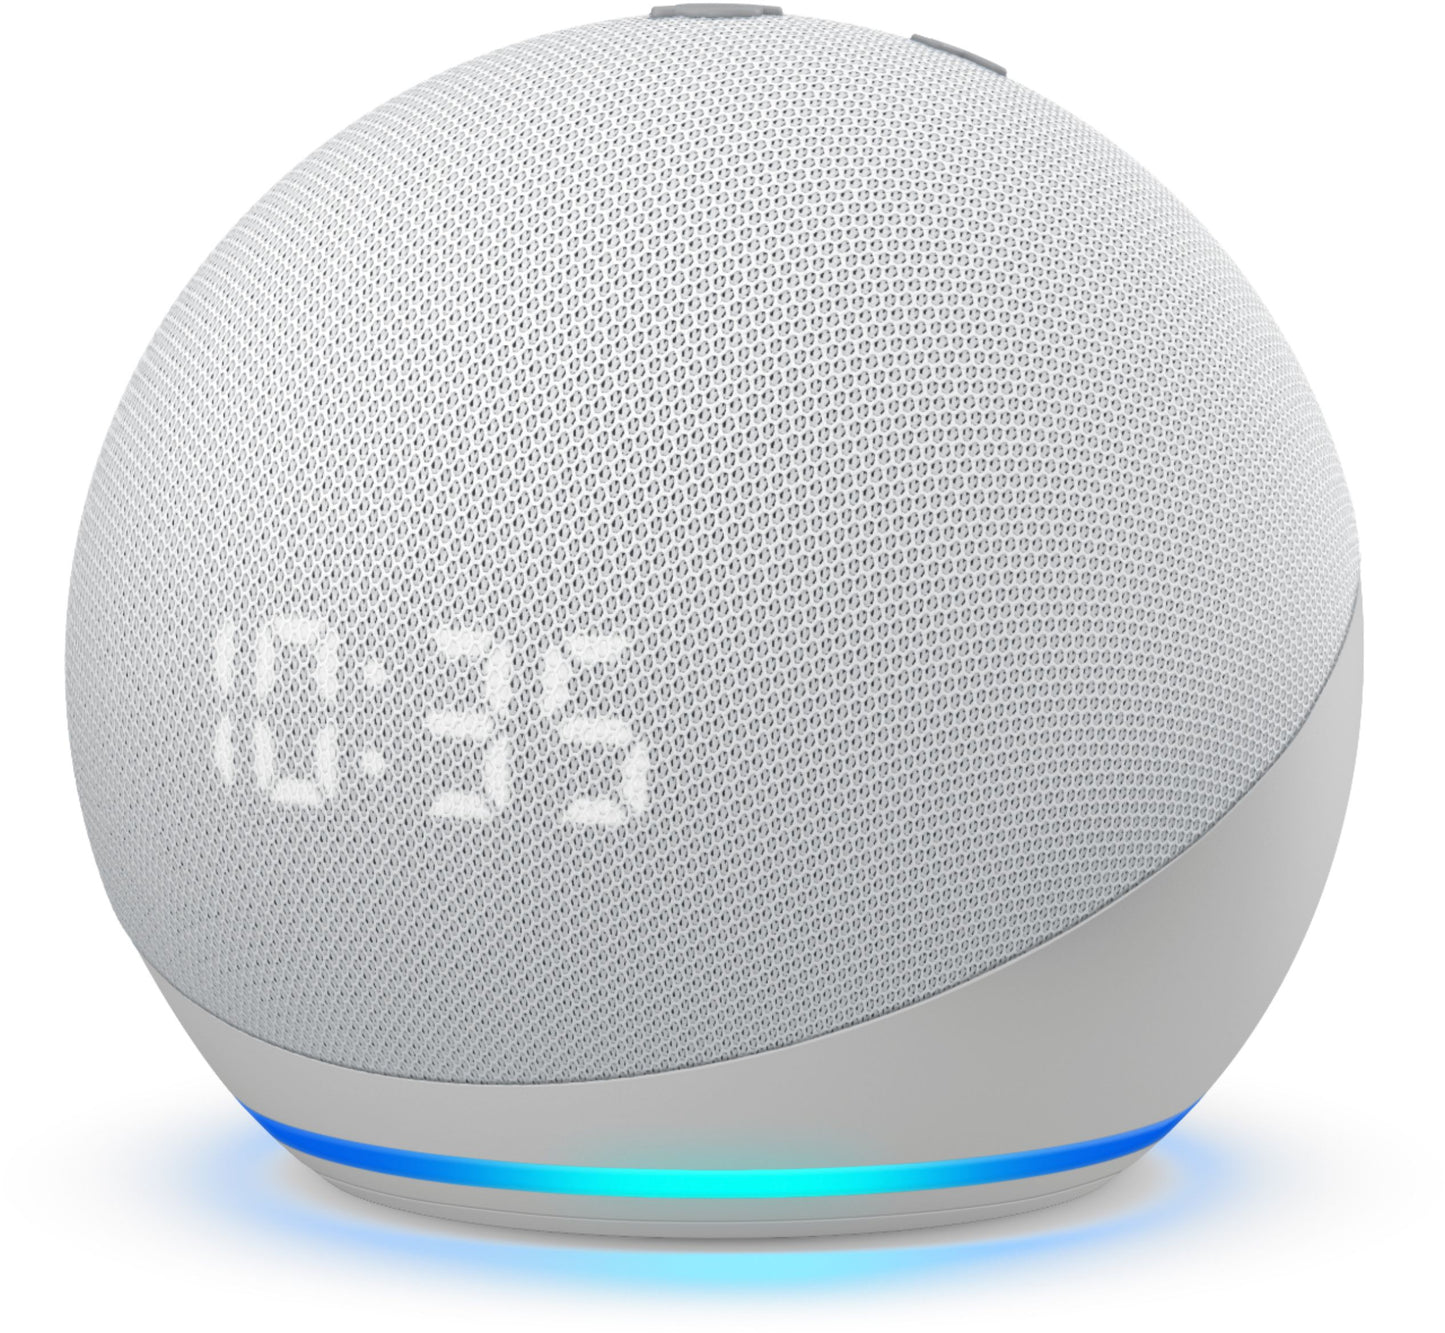 Amazon Echo Dot 4th Gen with Clock - White